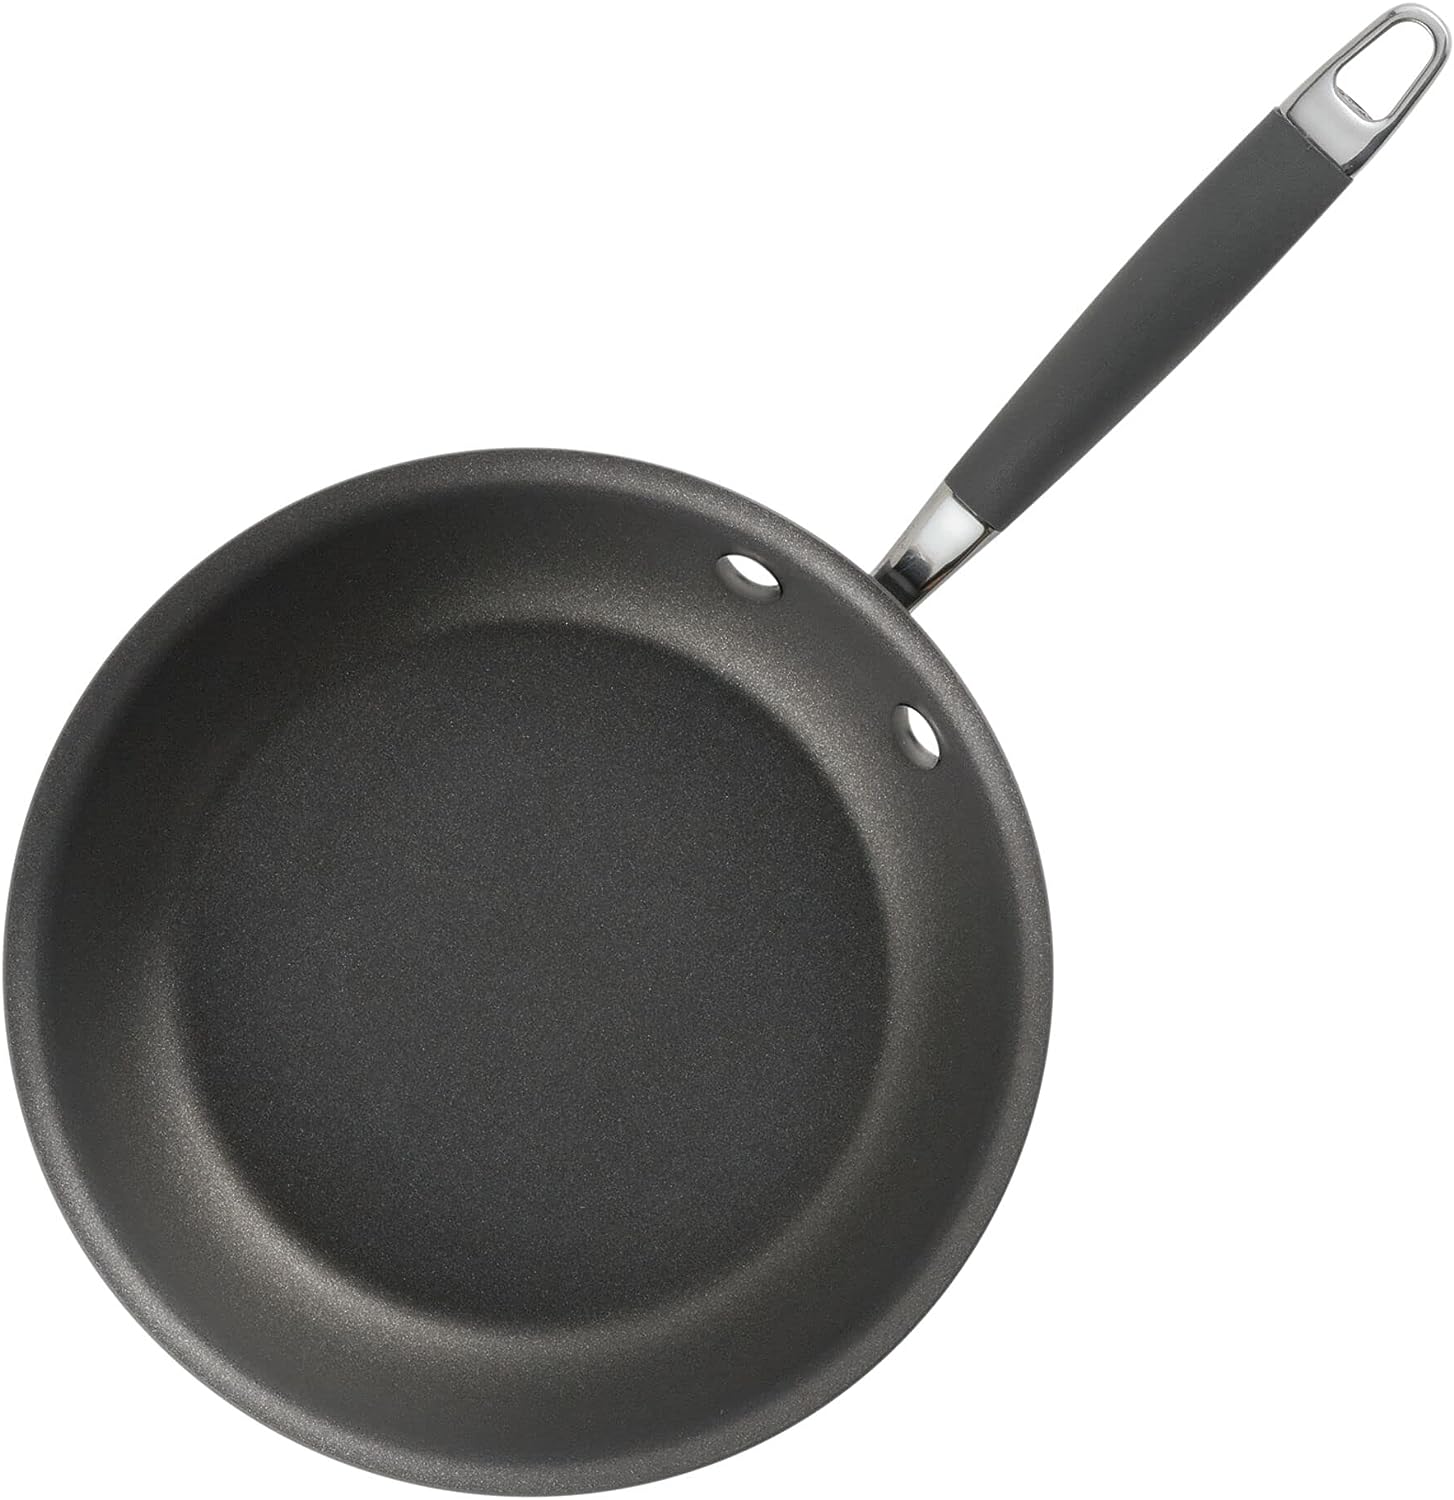 Anolon 8 Inch Fry Pan